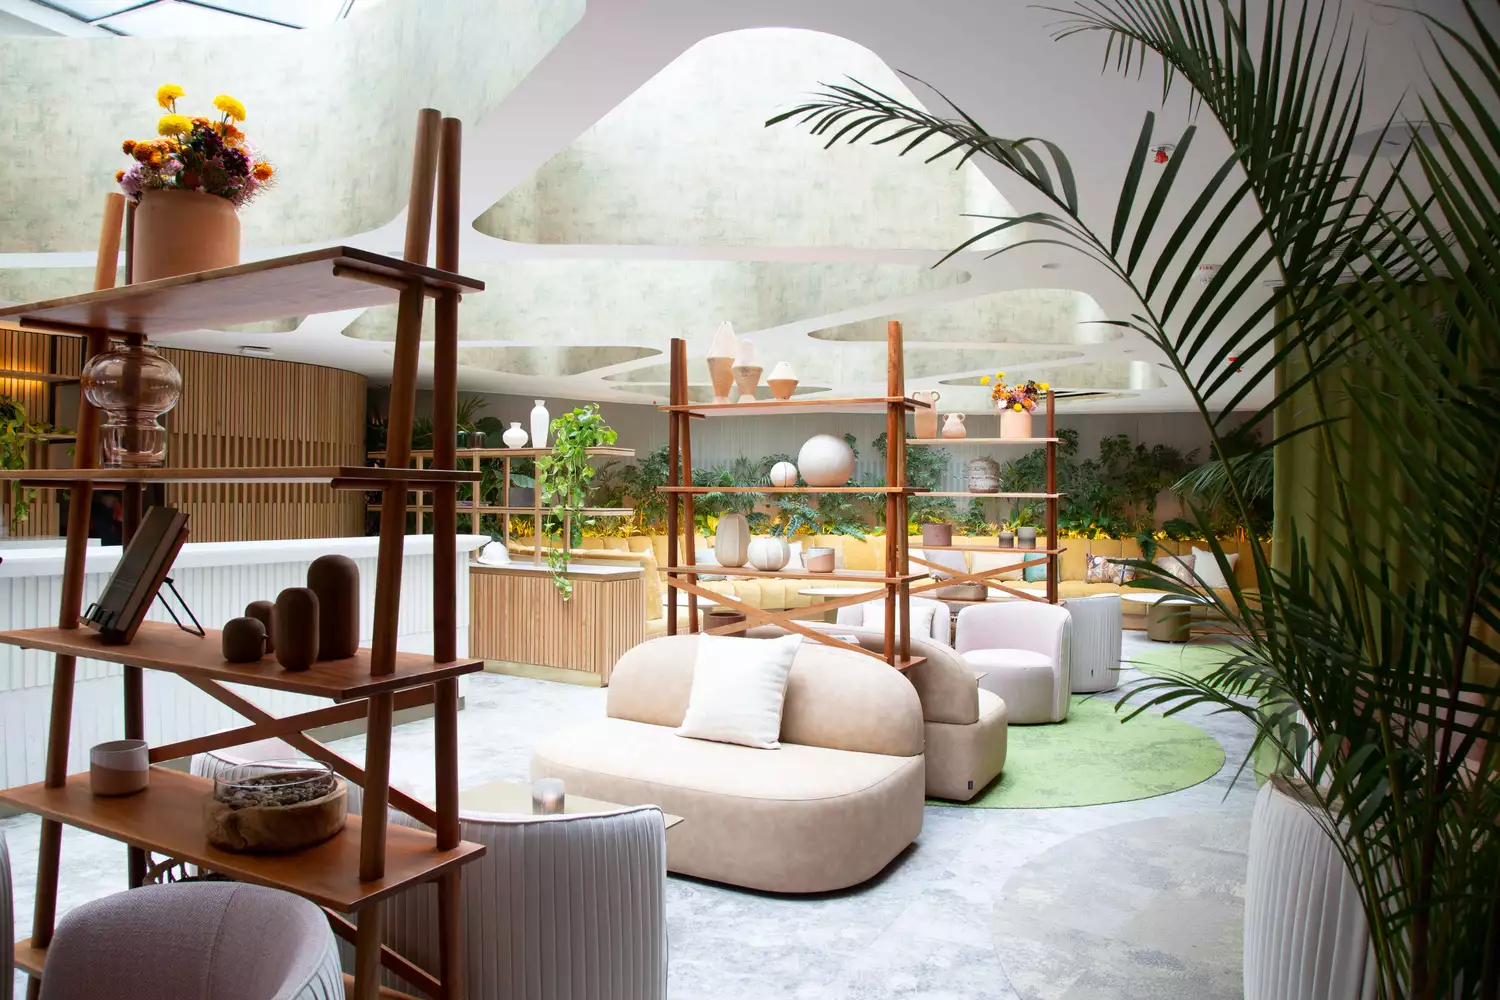 Mexico City's Newest Art Deco Hotel Has Dog-Friendly Amenities